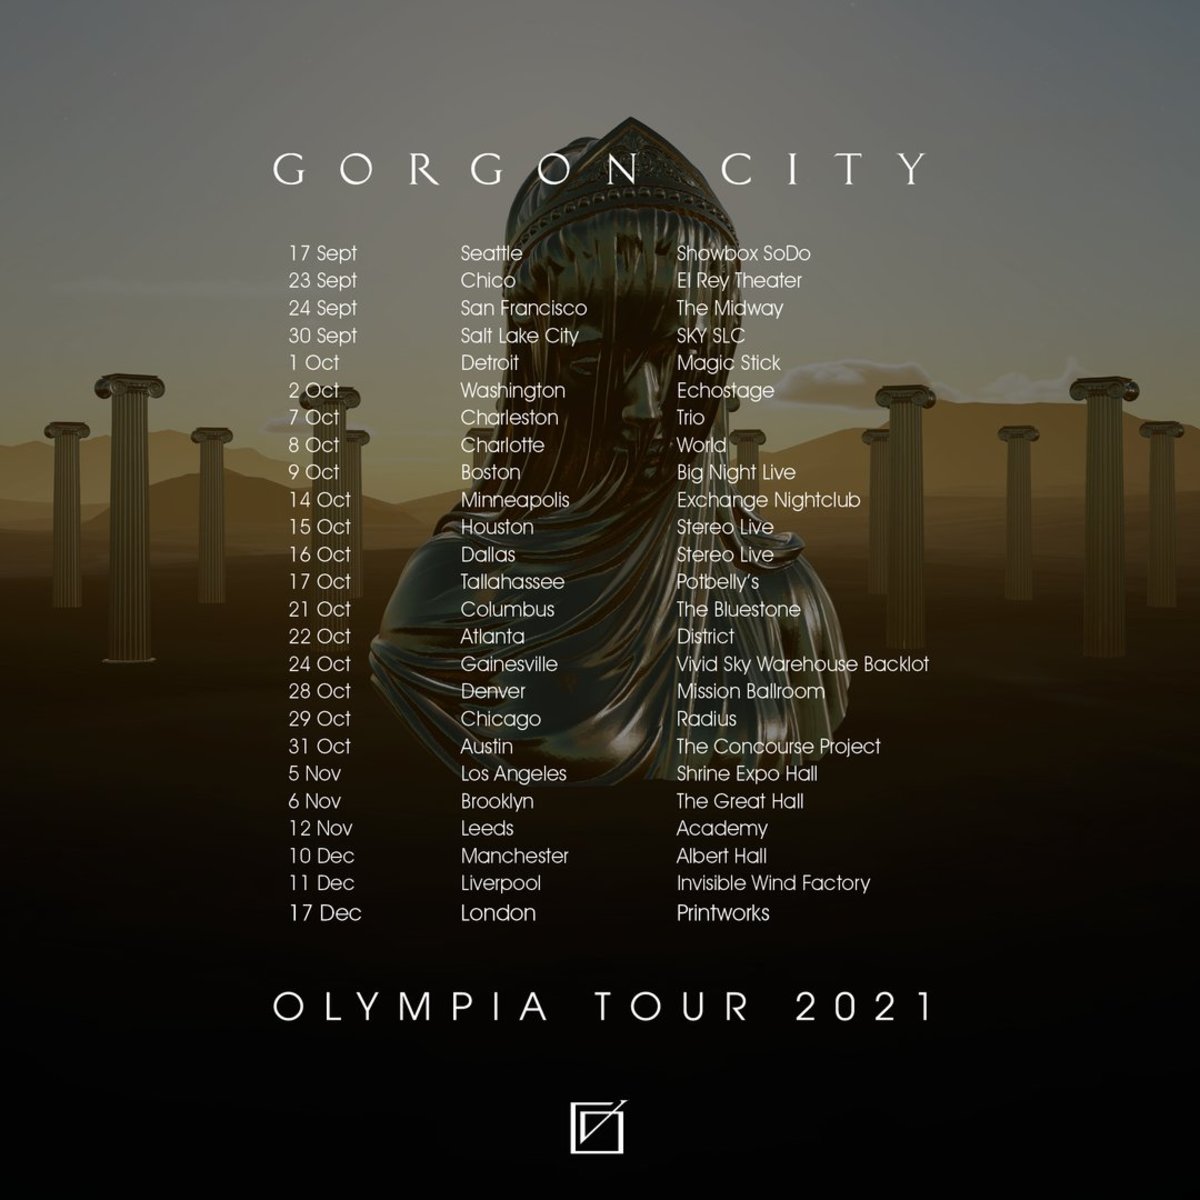 City Announces Olympia Tour 2021 Dates The Latest